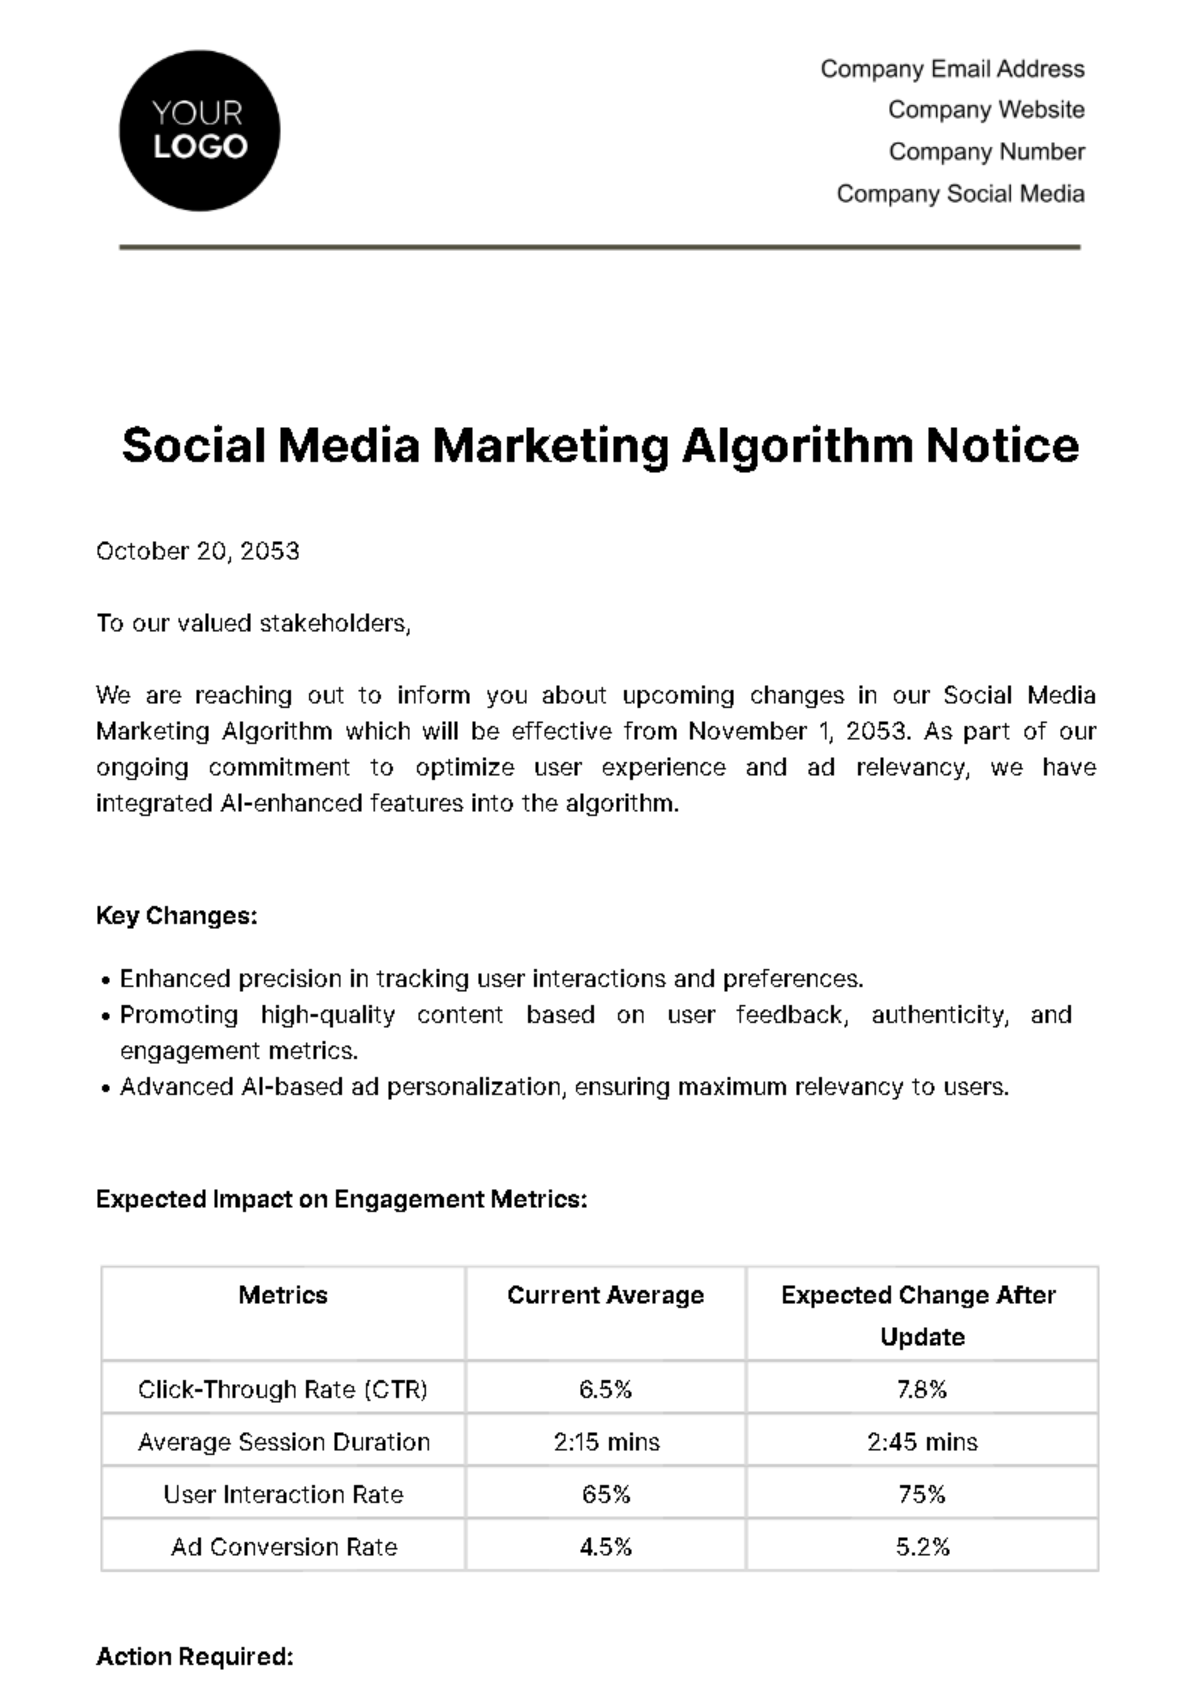 Social Media Marketing Algorithm Notice Template